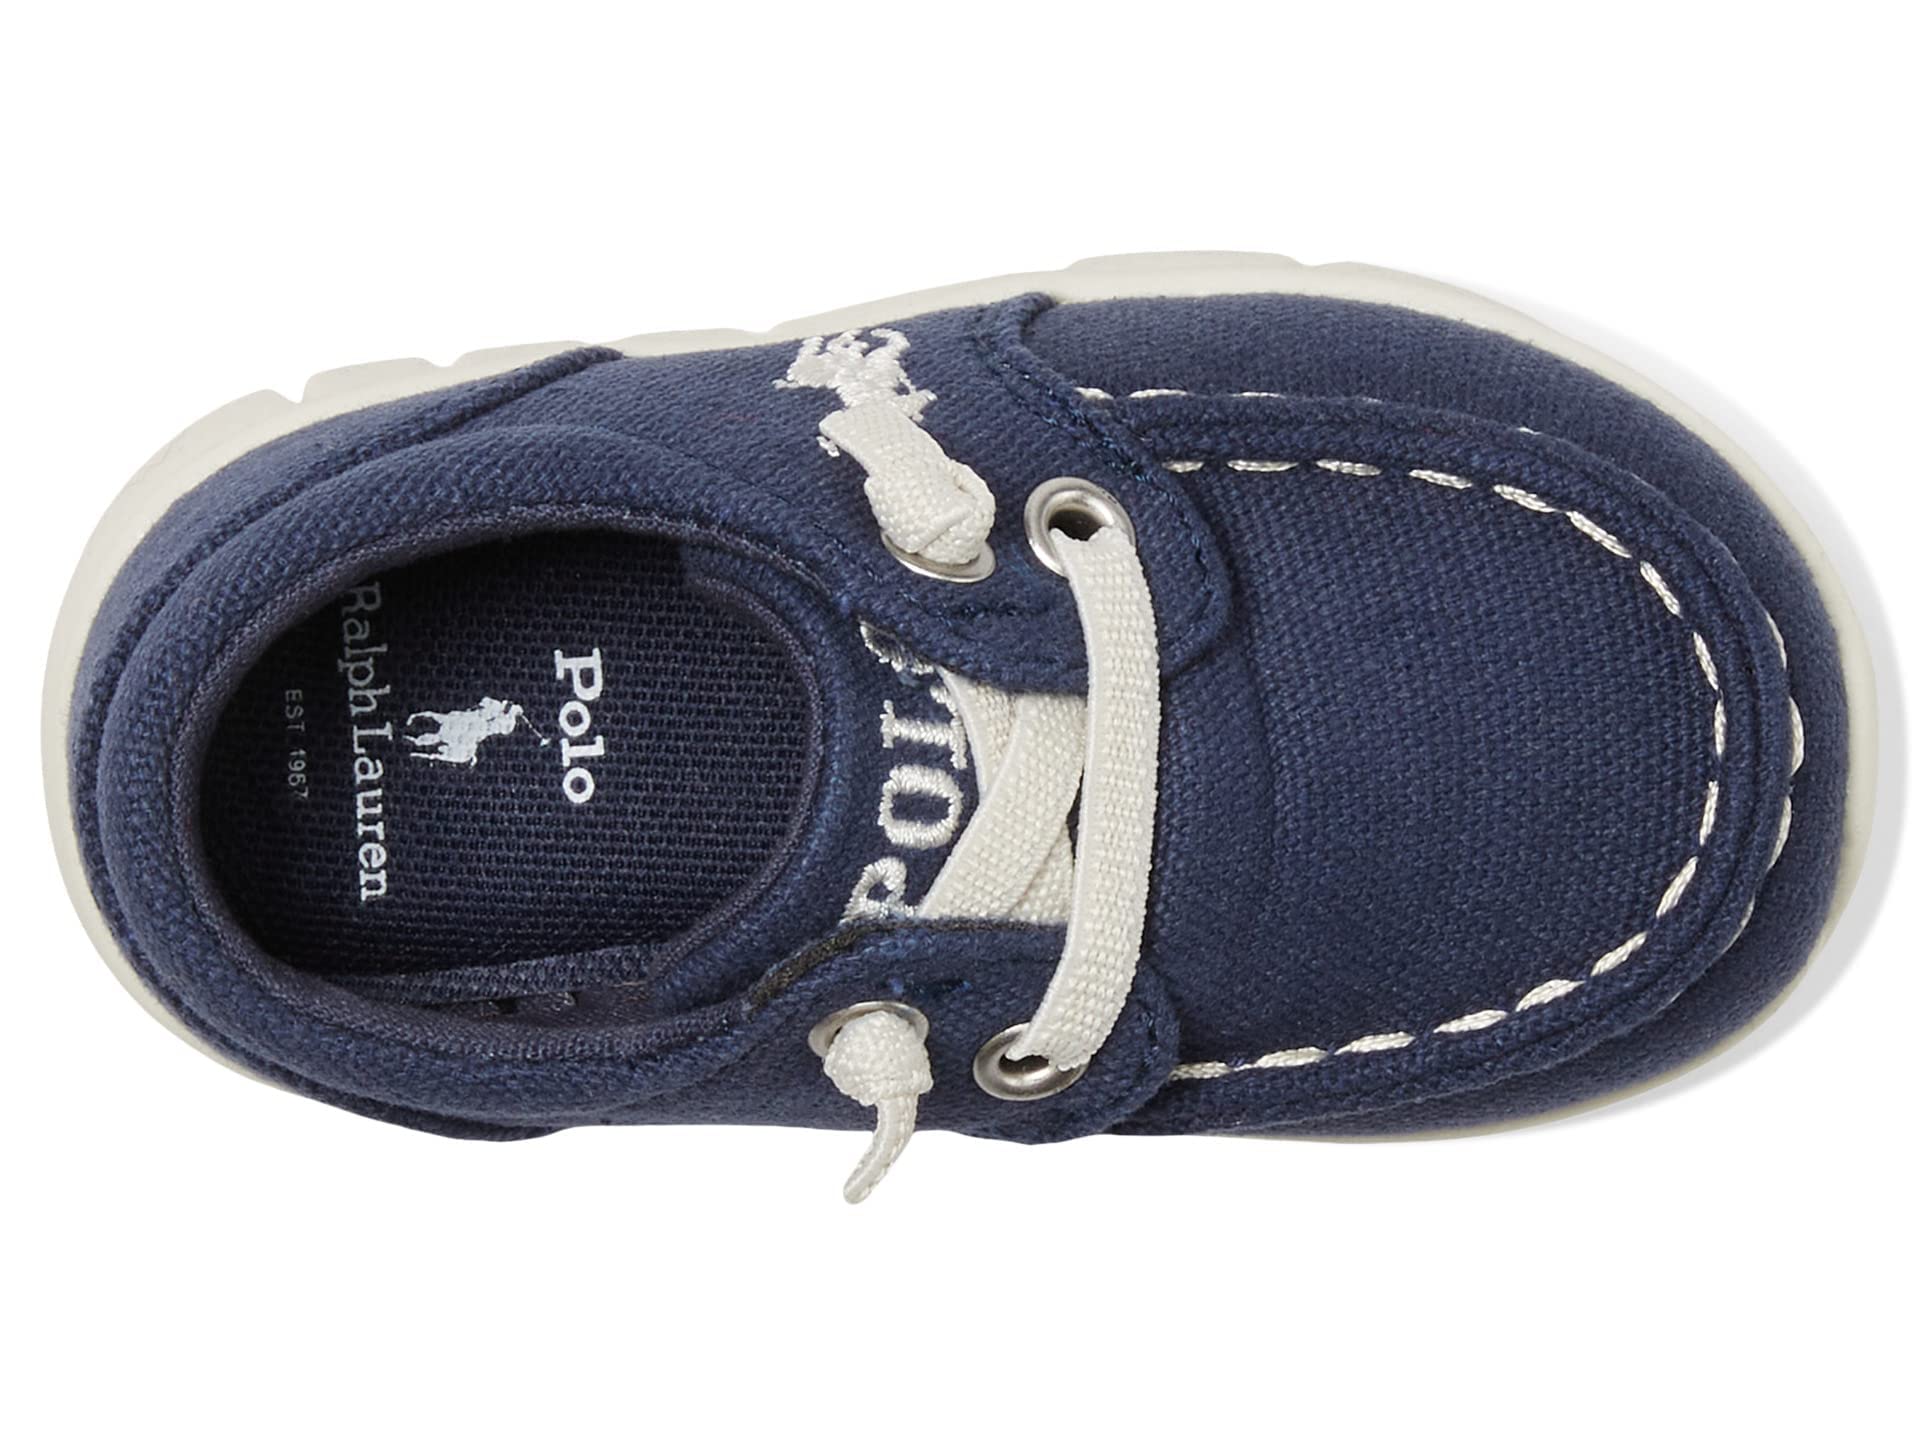 POLO RALPH LAUREN Unisex-Child Barnes Casual Moc (Toddler) Sneaker